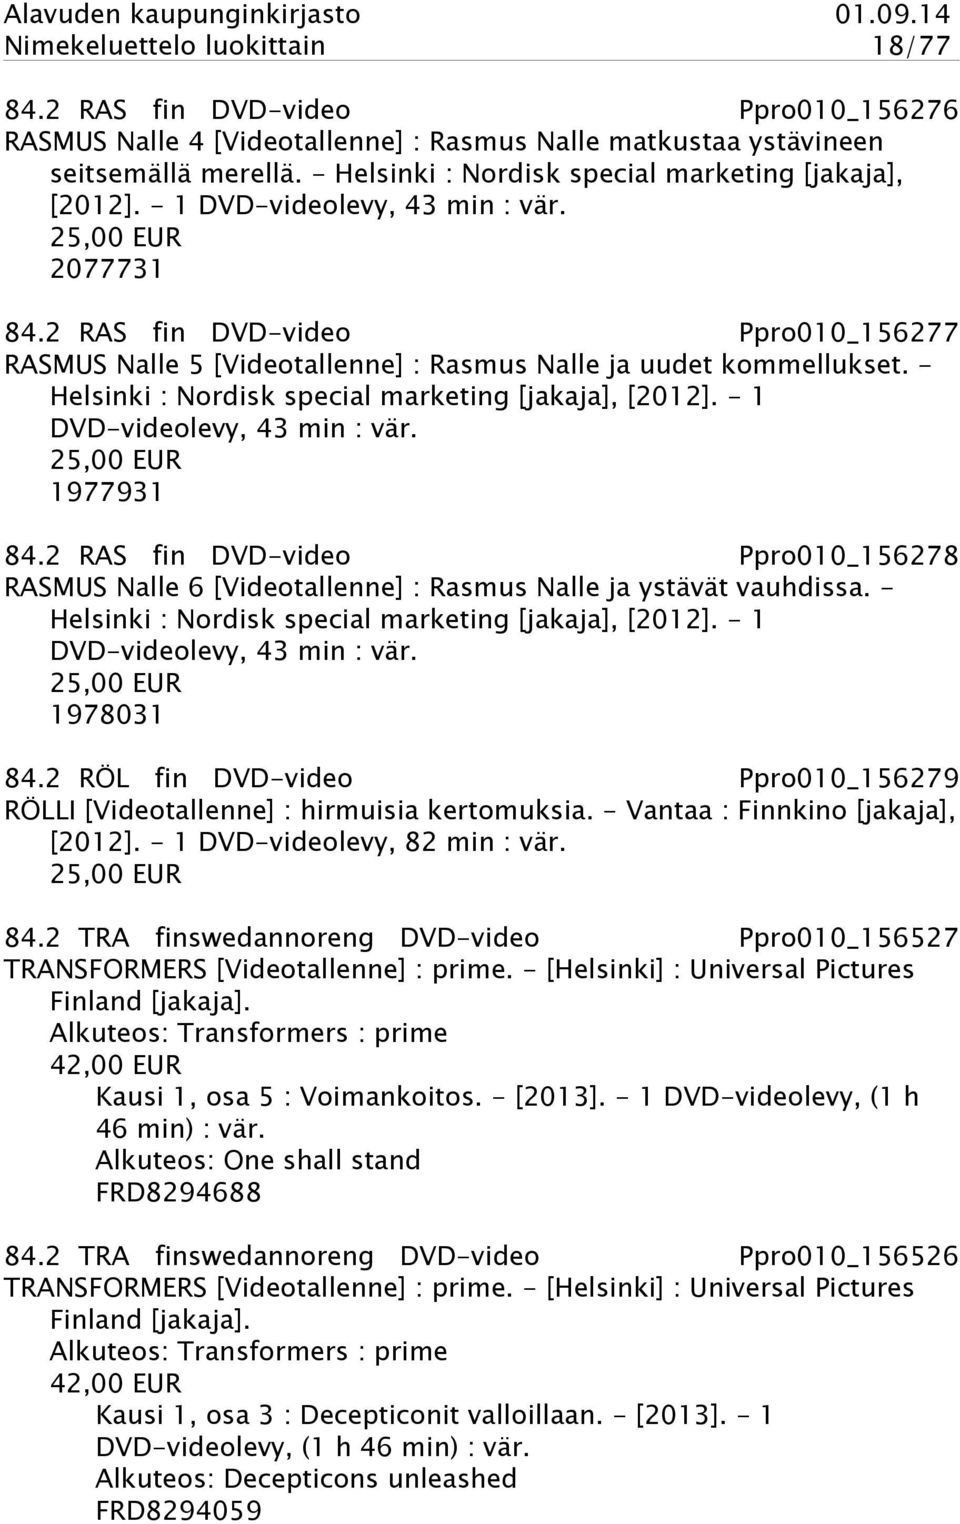 2 RAS fin DVD-video Ppro010_156277 RASMUS Nalle 5 [Videotallenne] : Rasmus Nalle ja uudet kommellukset. - Helsinki : Nordisk special marketing [jakaja], [2012]. - 1 DVD-videolevy, 43 min : vär.